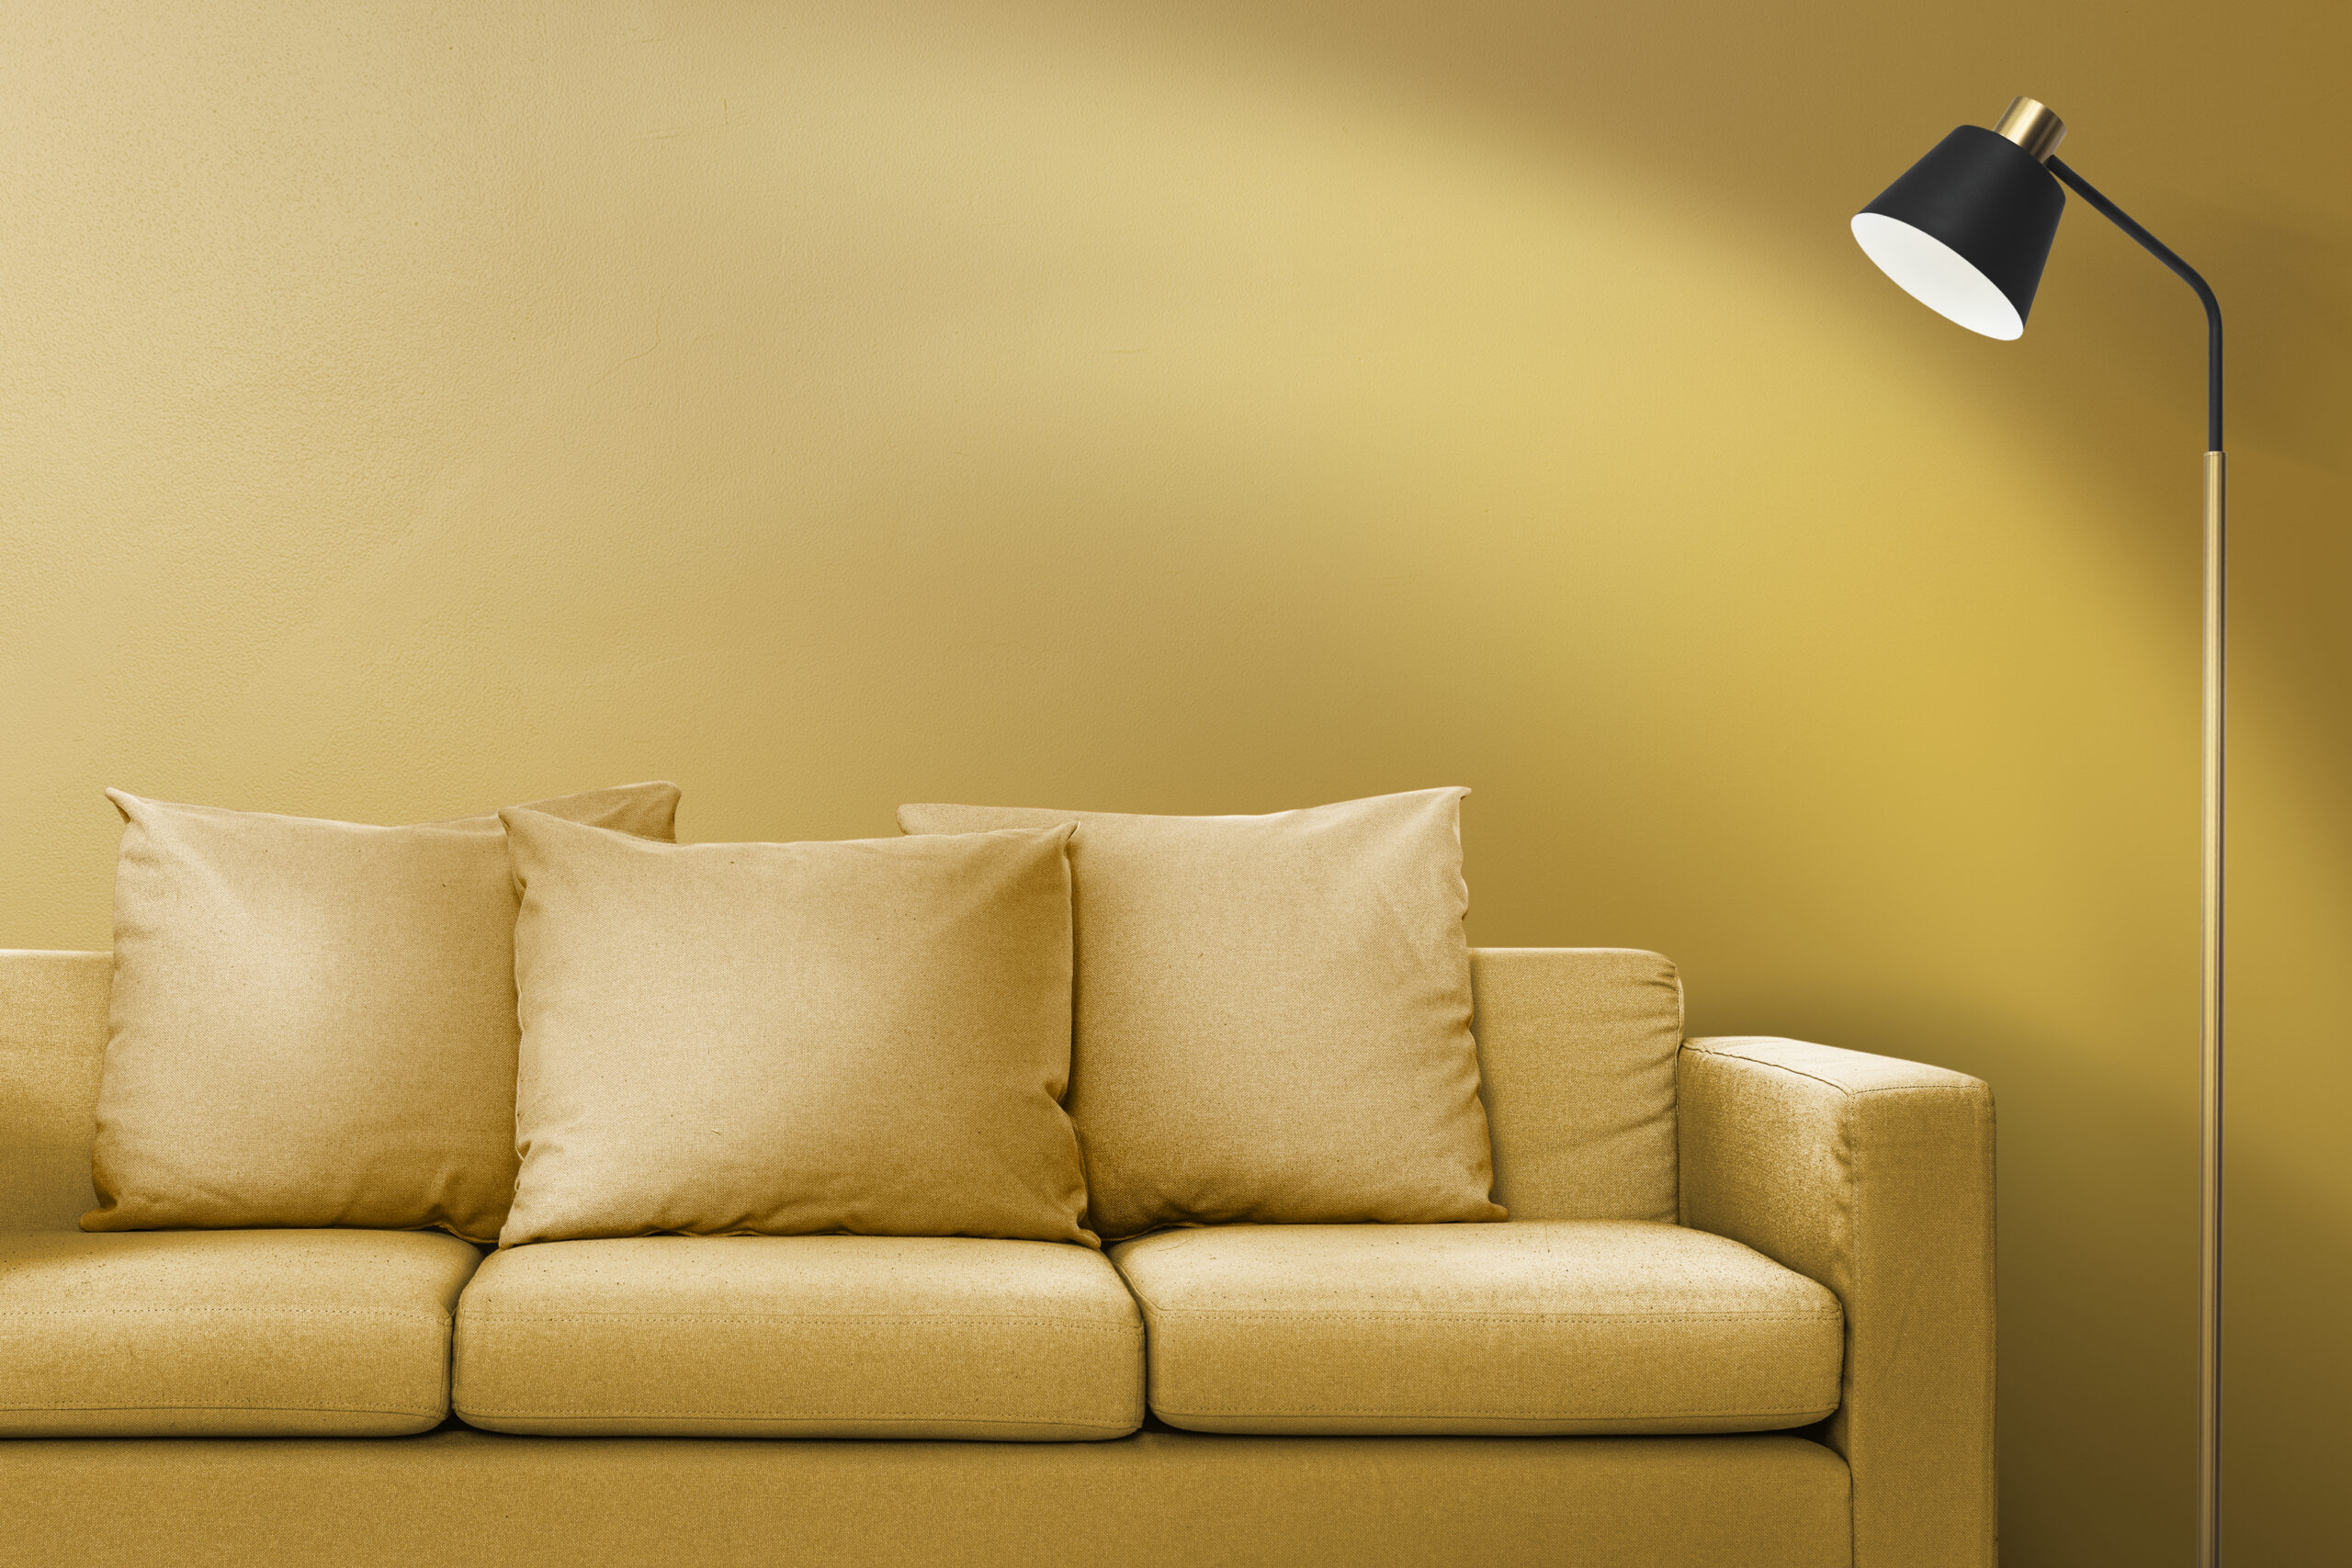 Contemporary living room interior design with a yellow sofa